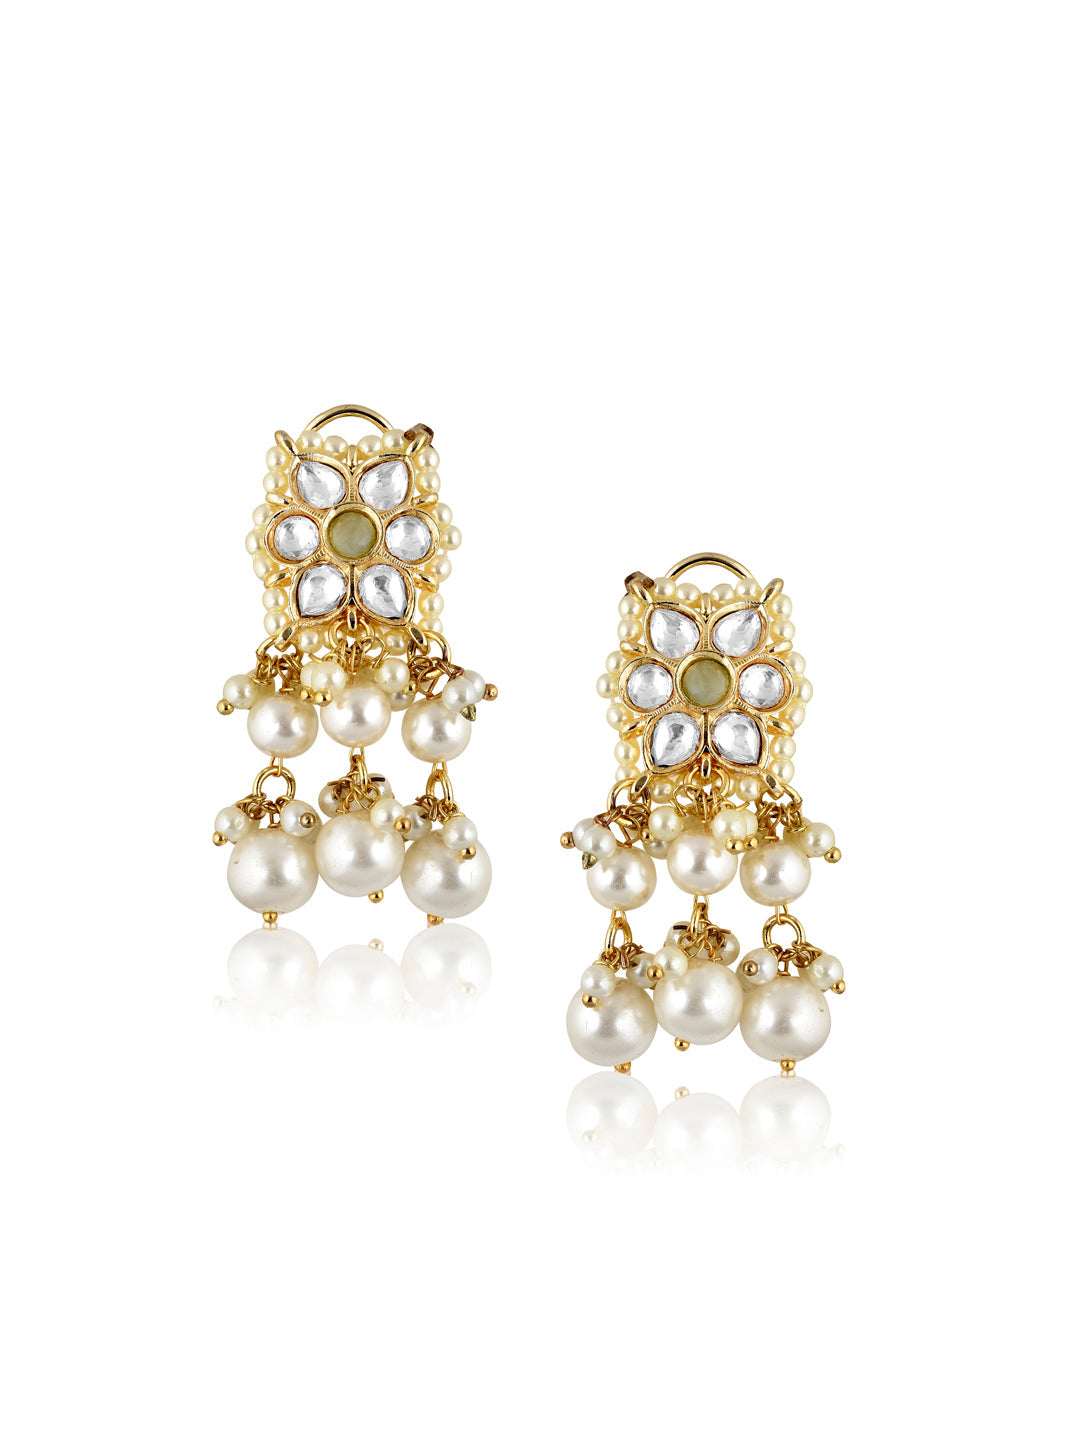 Miera Kundan And Pearls Embellished Choker Necklace Set 